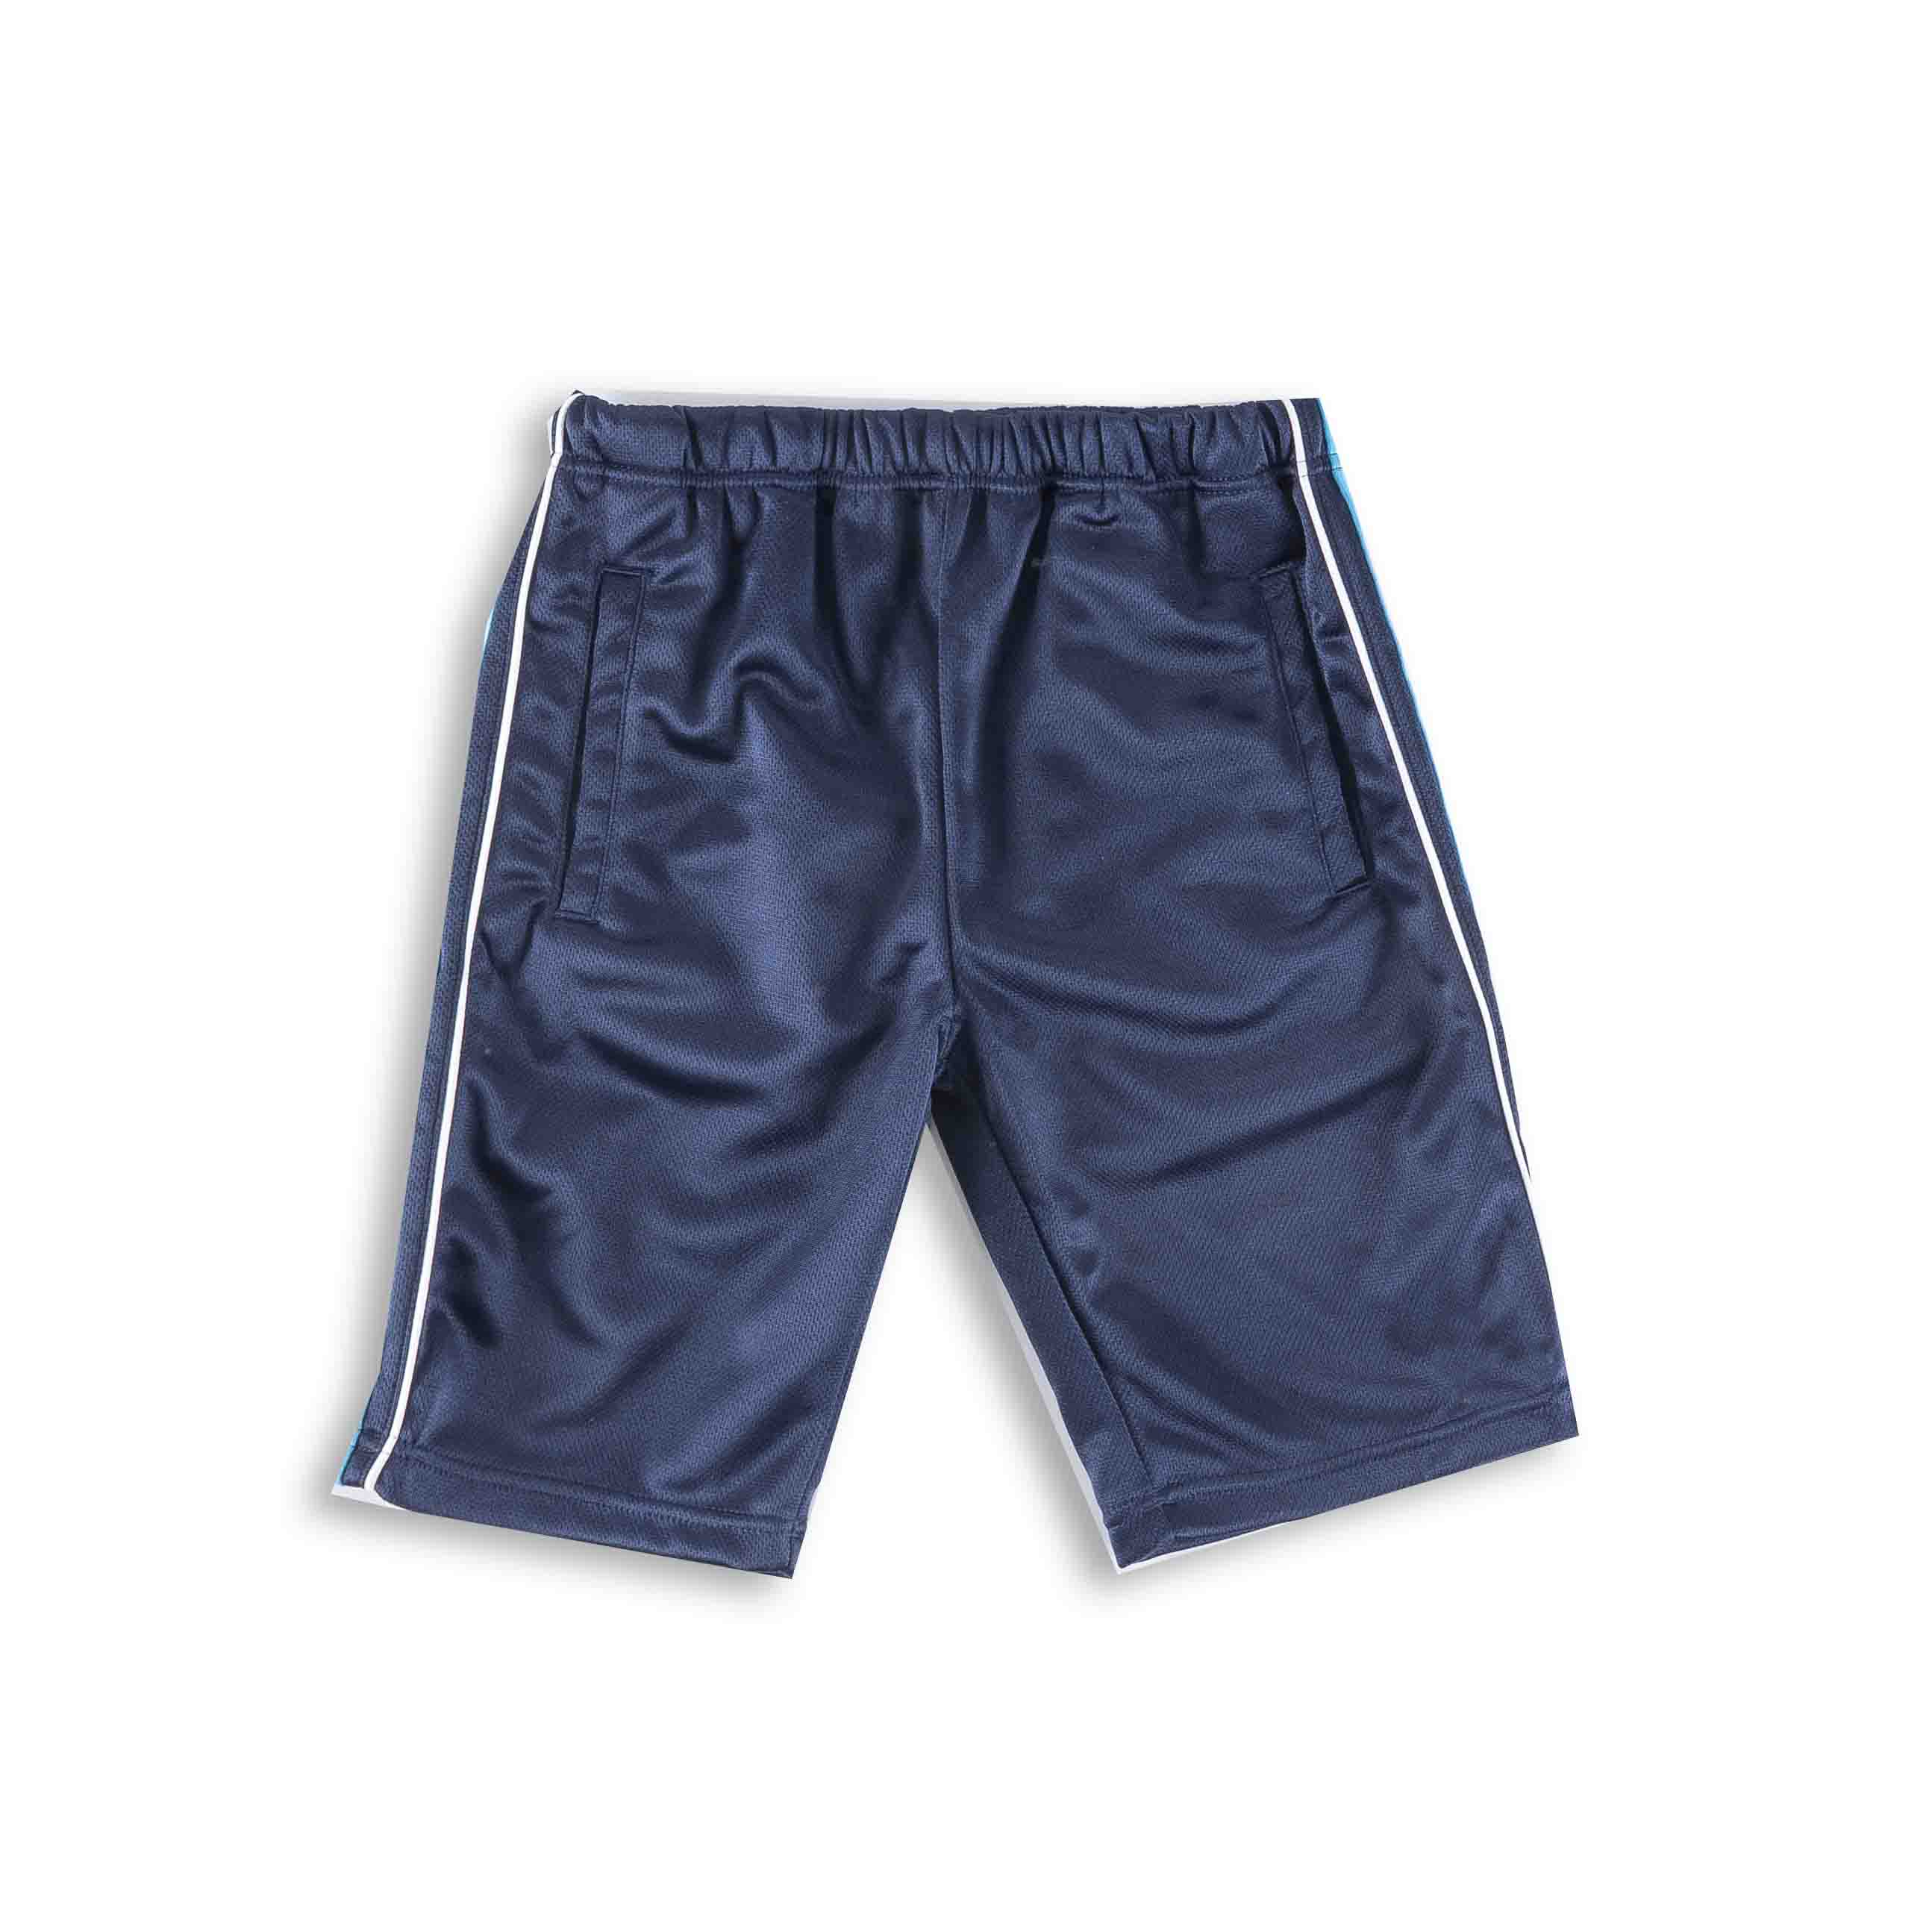 Men's Sport shorts 